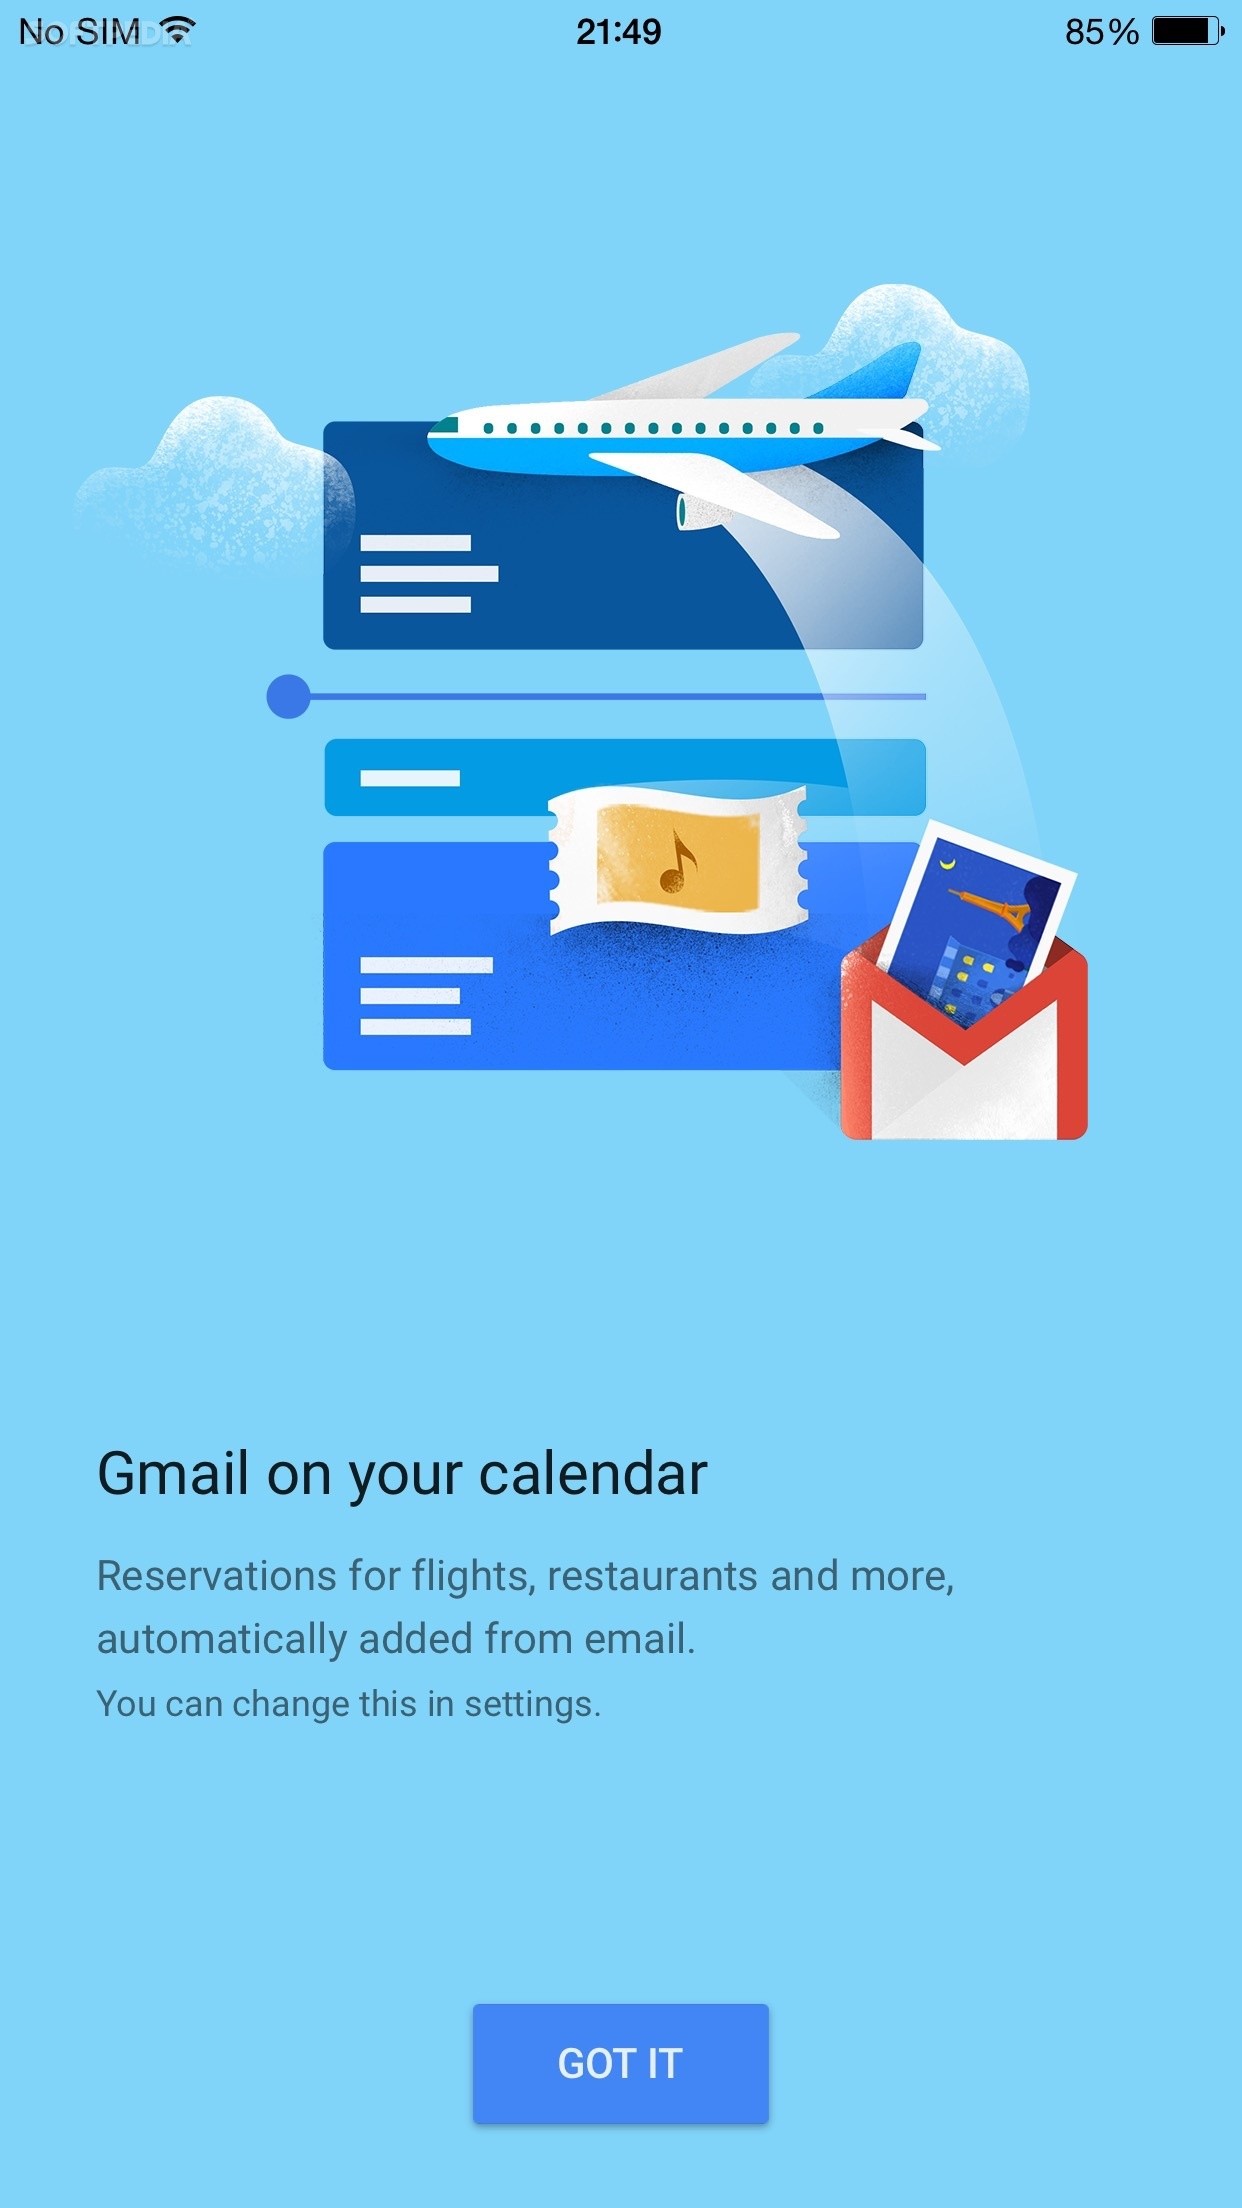 Google Releases Official Google Calendar App for iPhone